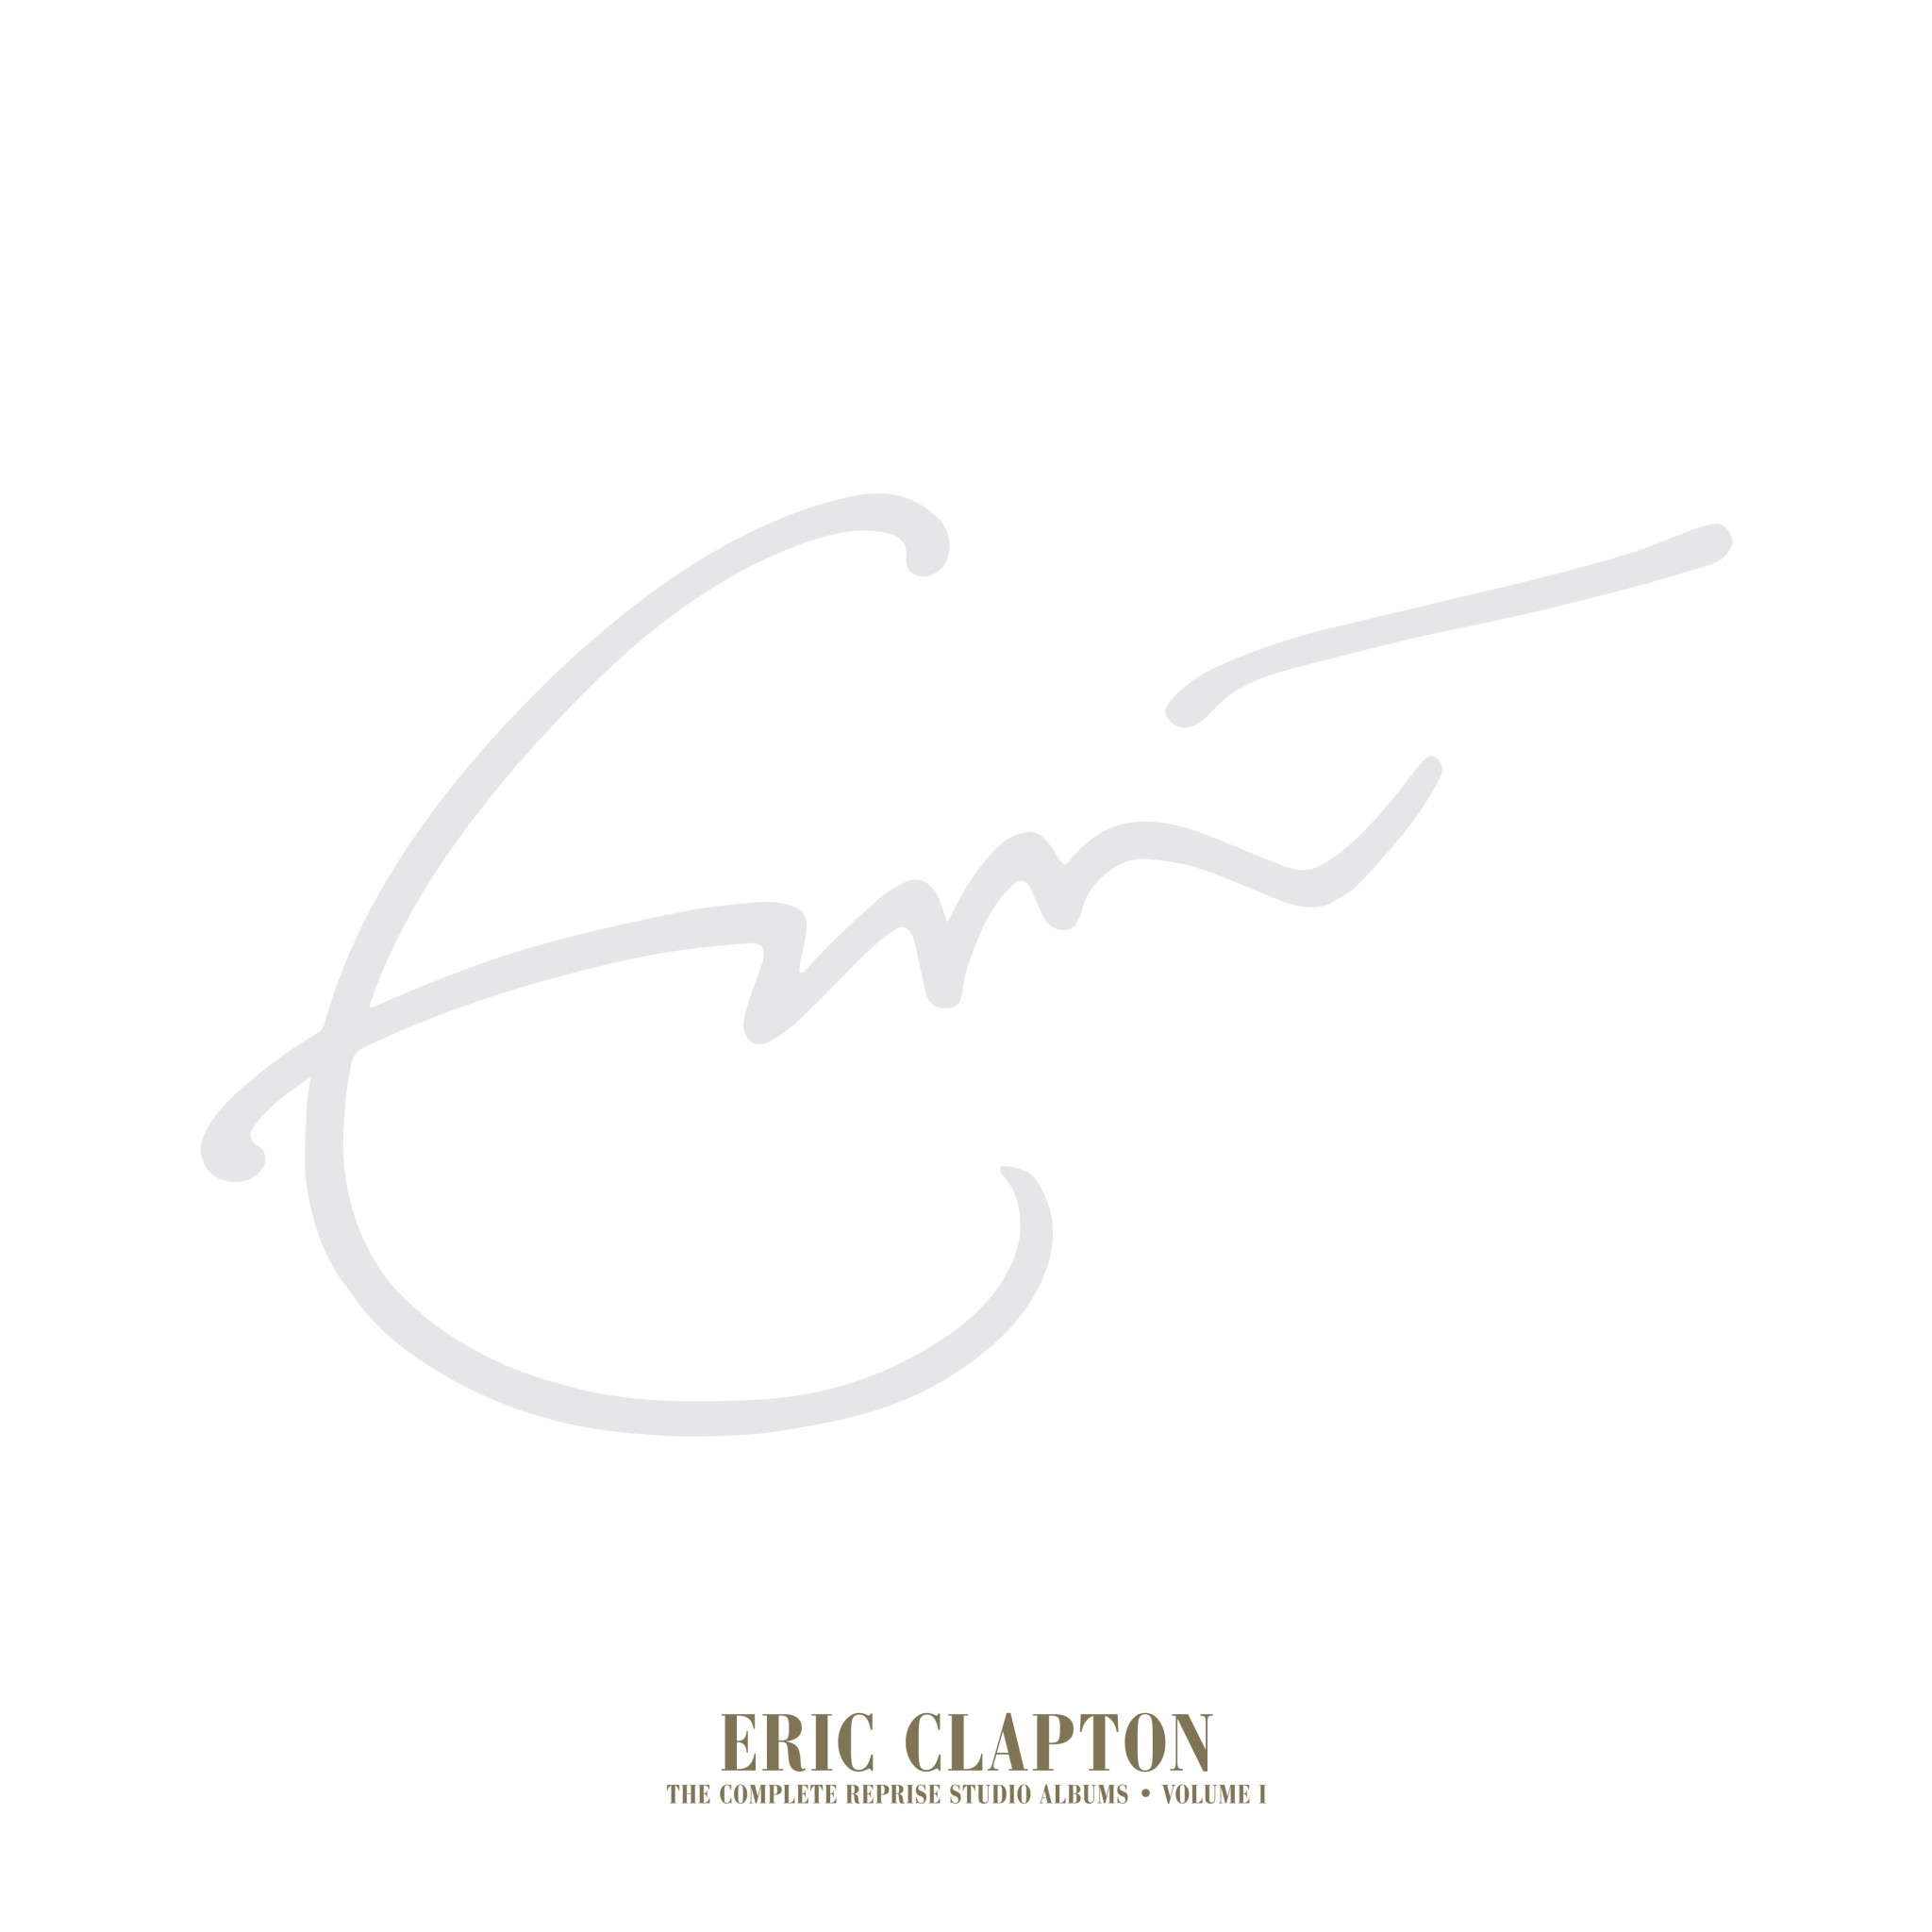 Eric Clapton – The Complete Reprise Studio Albums Volume 1